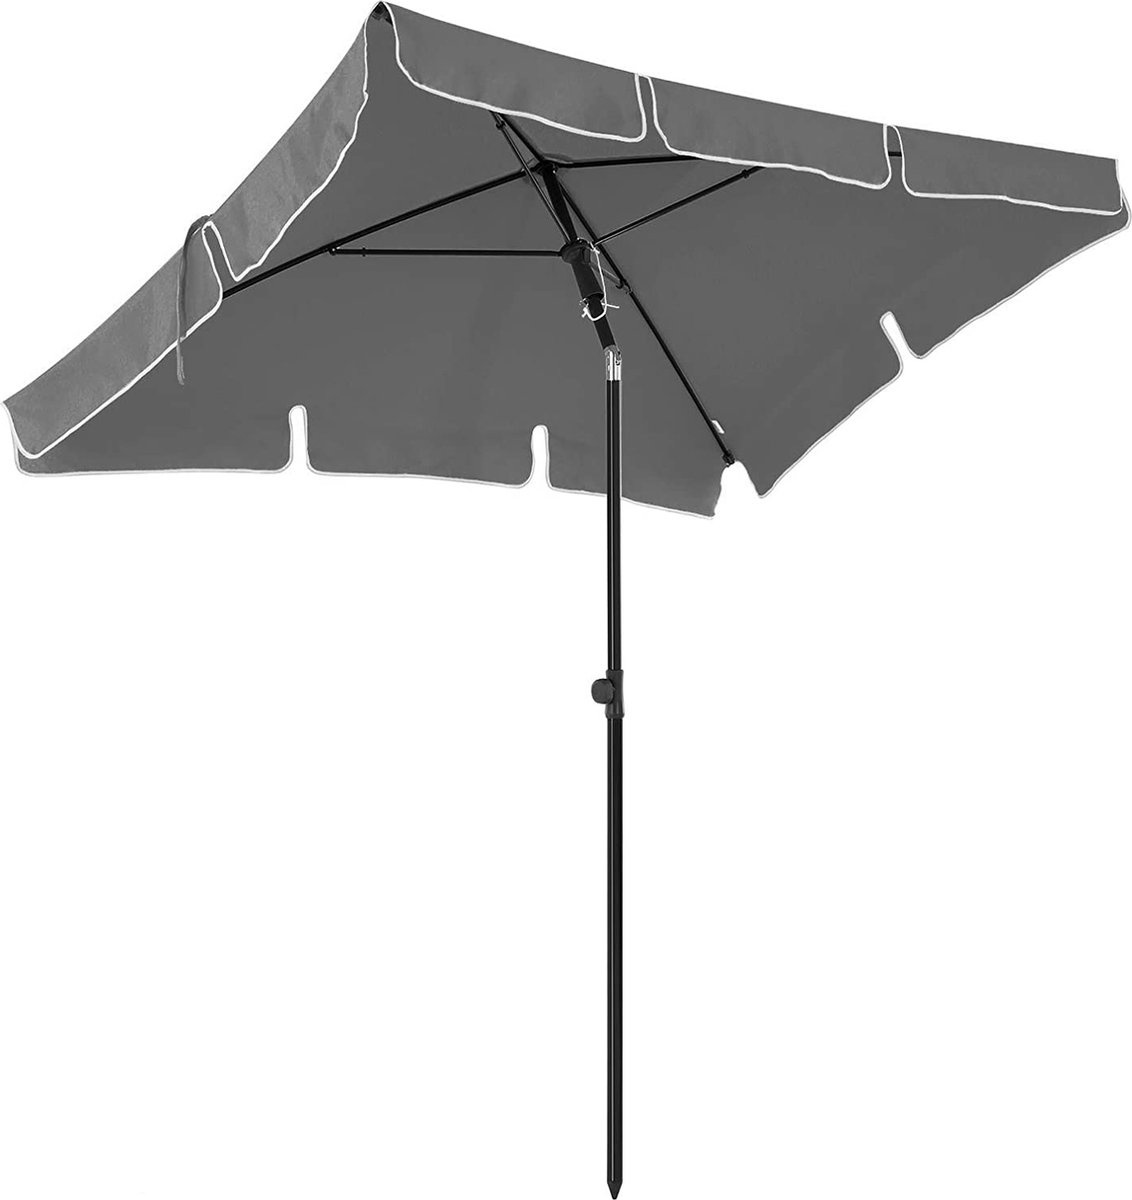 O'DADDY O’DADDY Parasol - Rechthoekig 200 x 125 cm - Balkon parasol met Kantelmechanisme - parasol balkon rechthoekig - Grijs